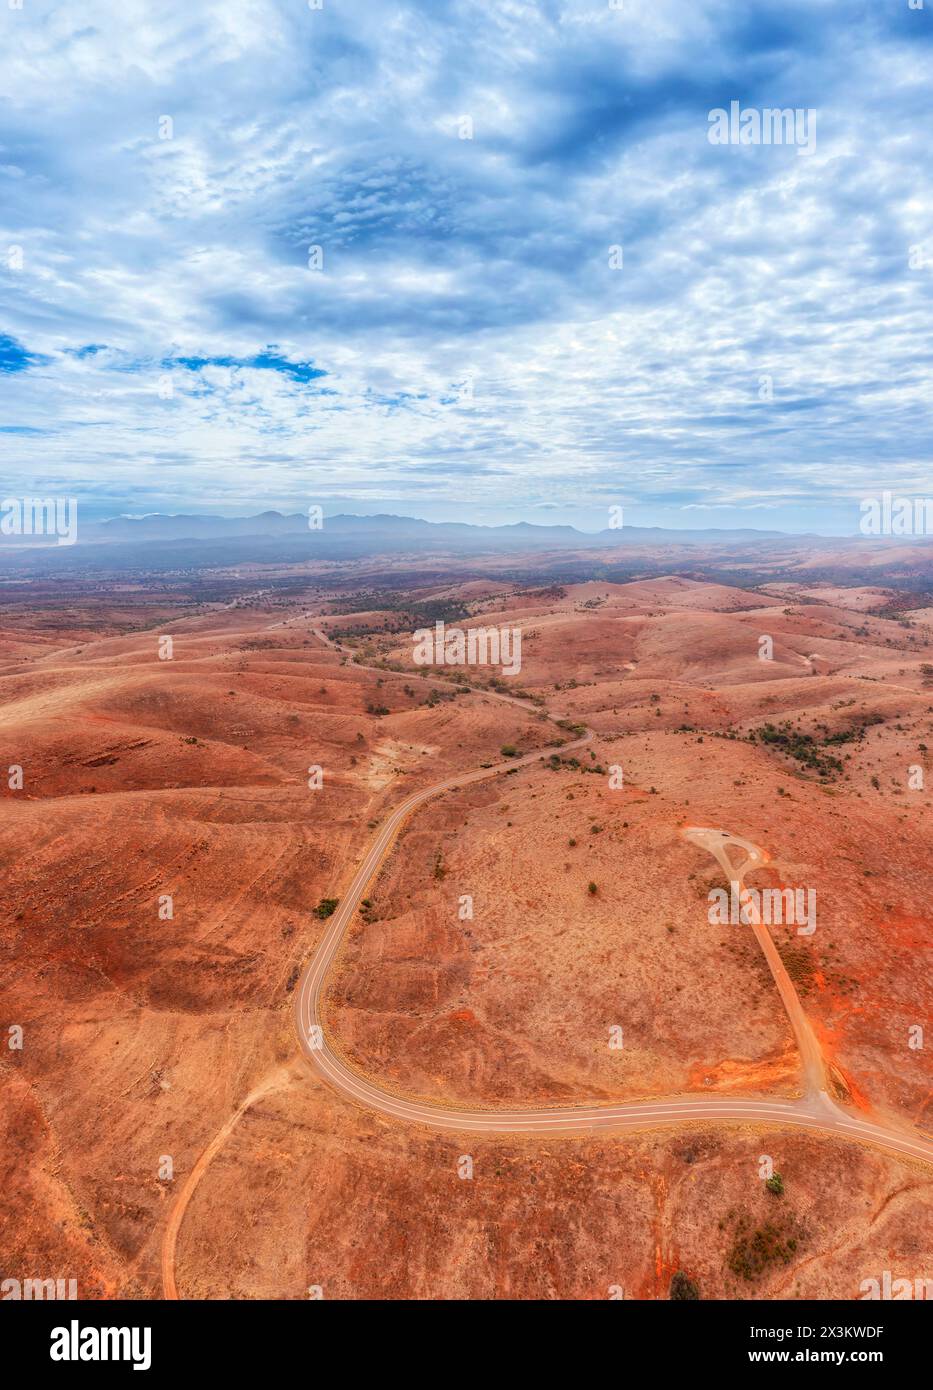 Hucks Lookout su Flinders Ranges Way verso Wilpena Pound in Australia meridionale - panorama aereo verticale da terra a cielo. Foto Stock